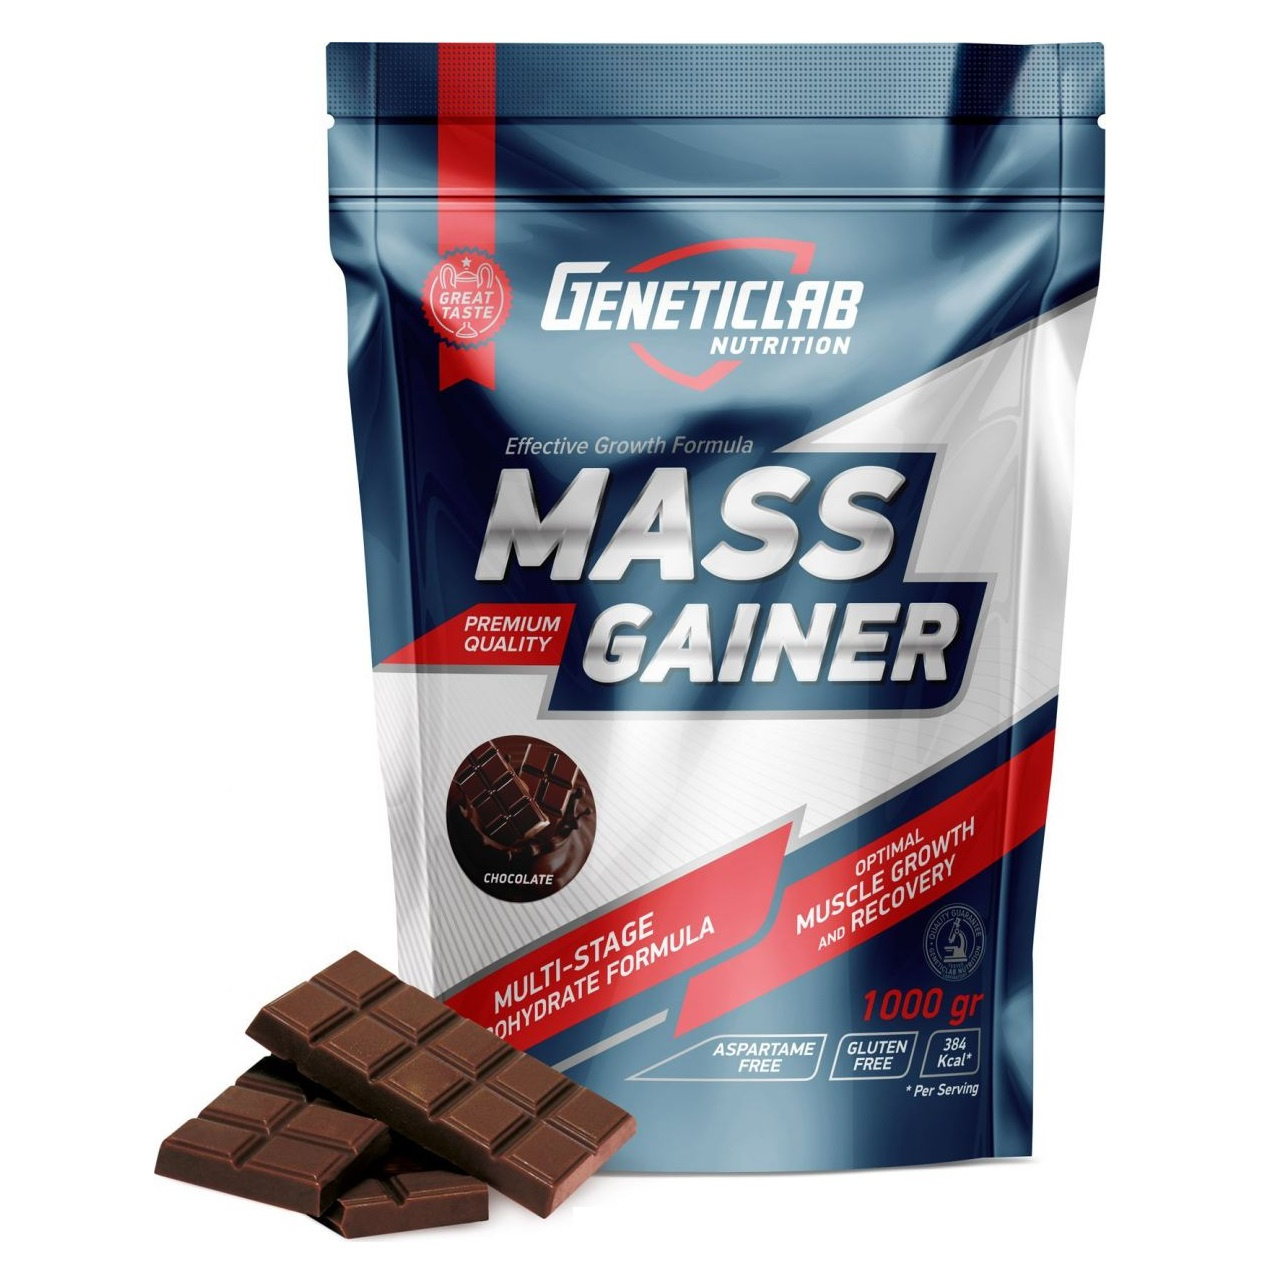 Гейнер GeneticLab Nutrition Mass Gainer, 1000 г, chocolate